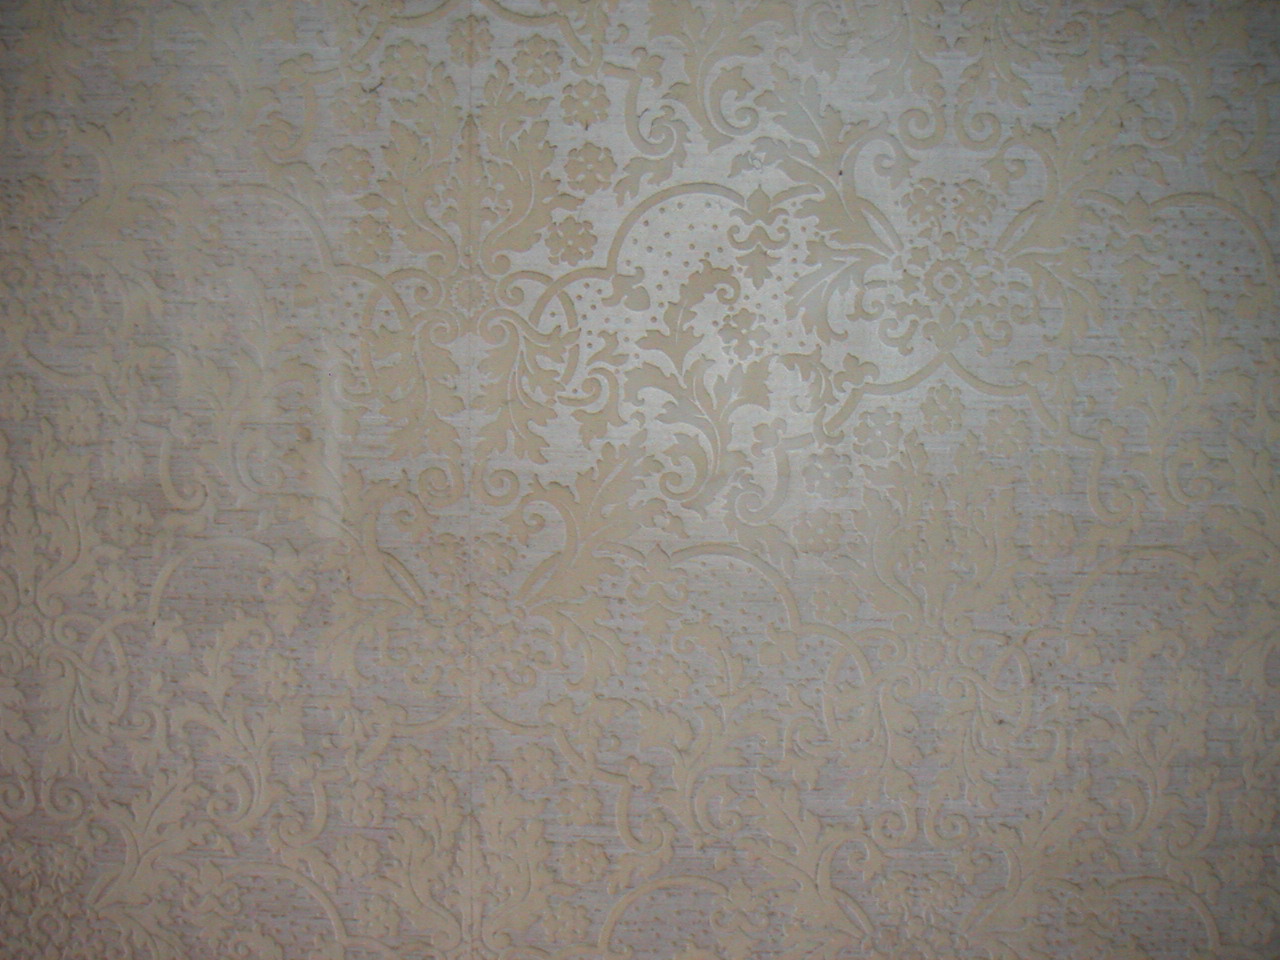 Close up of wallpaper